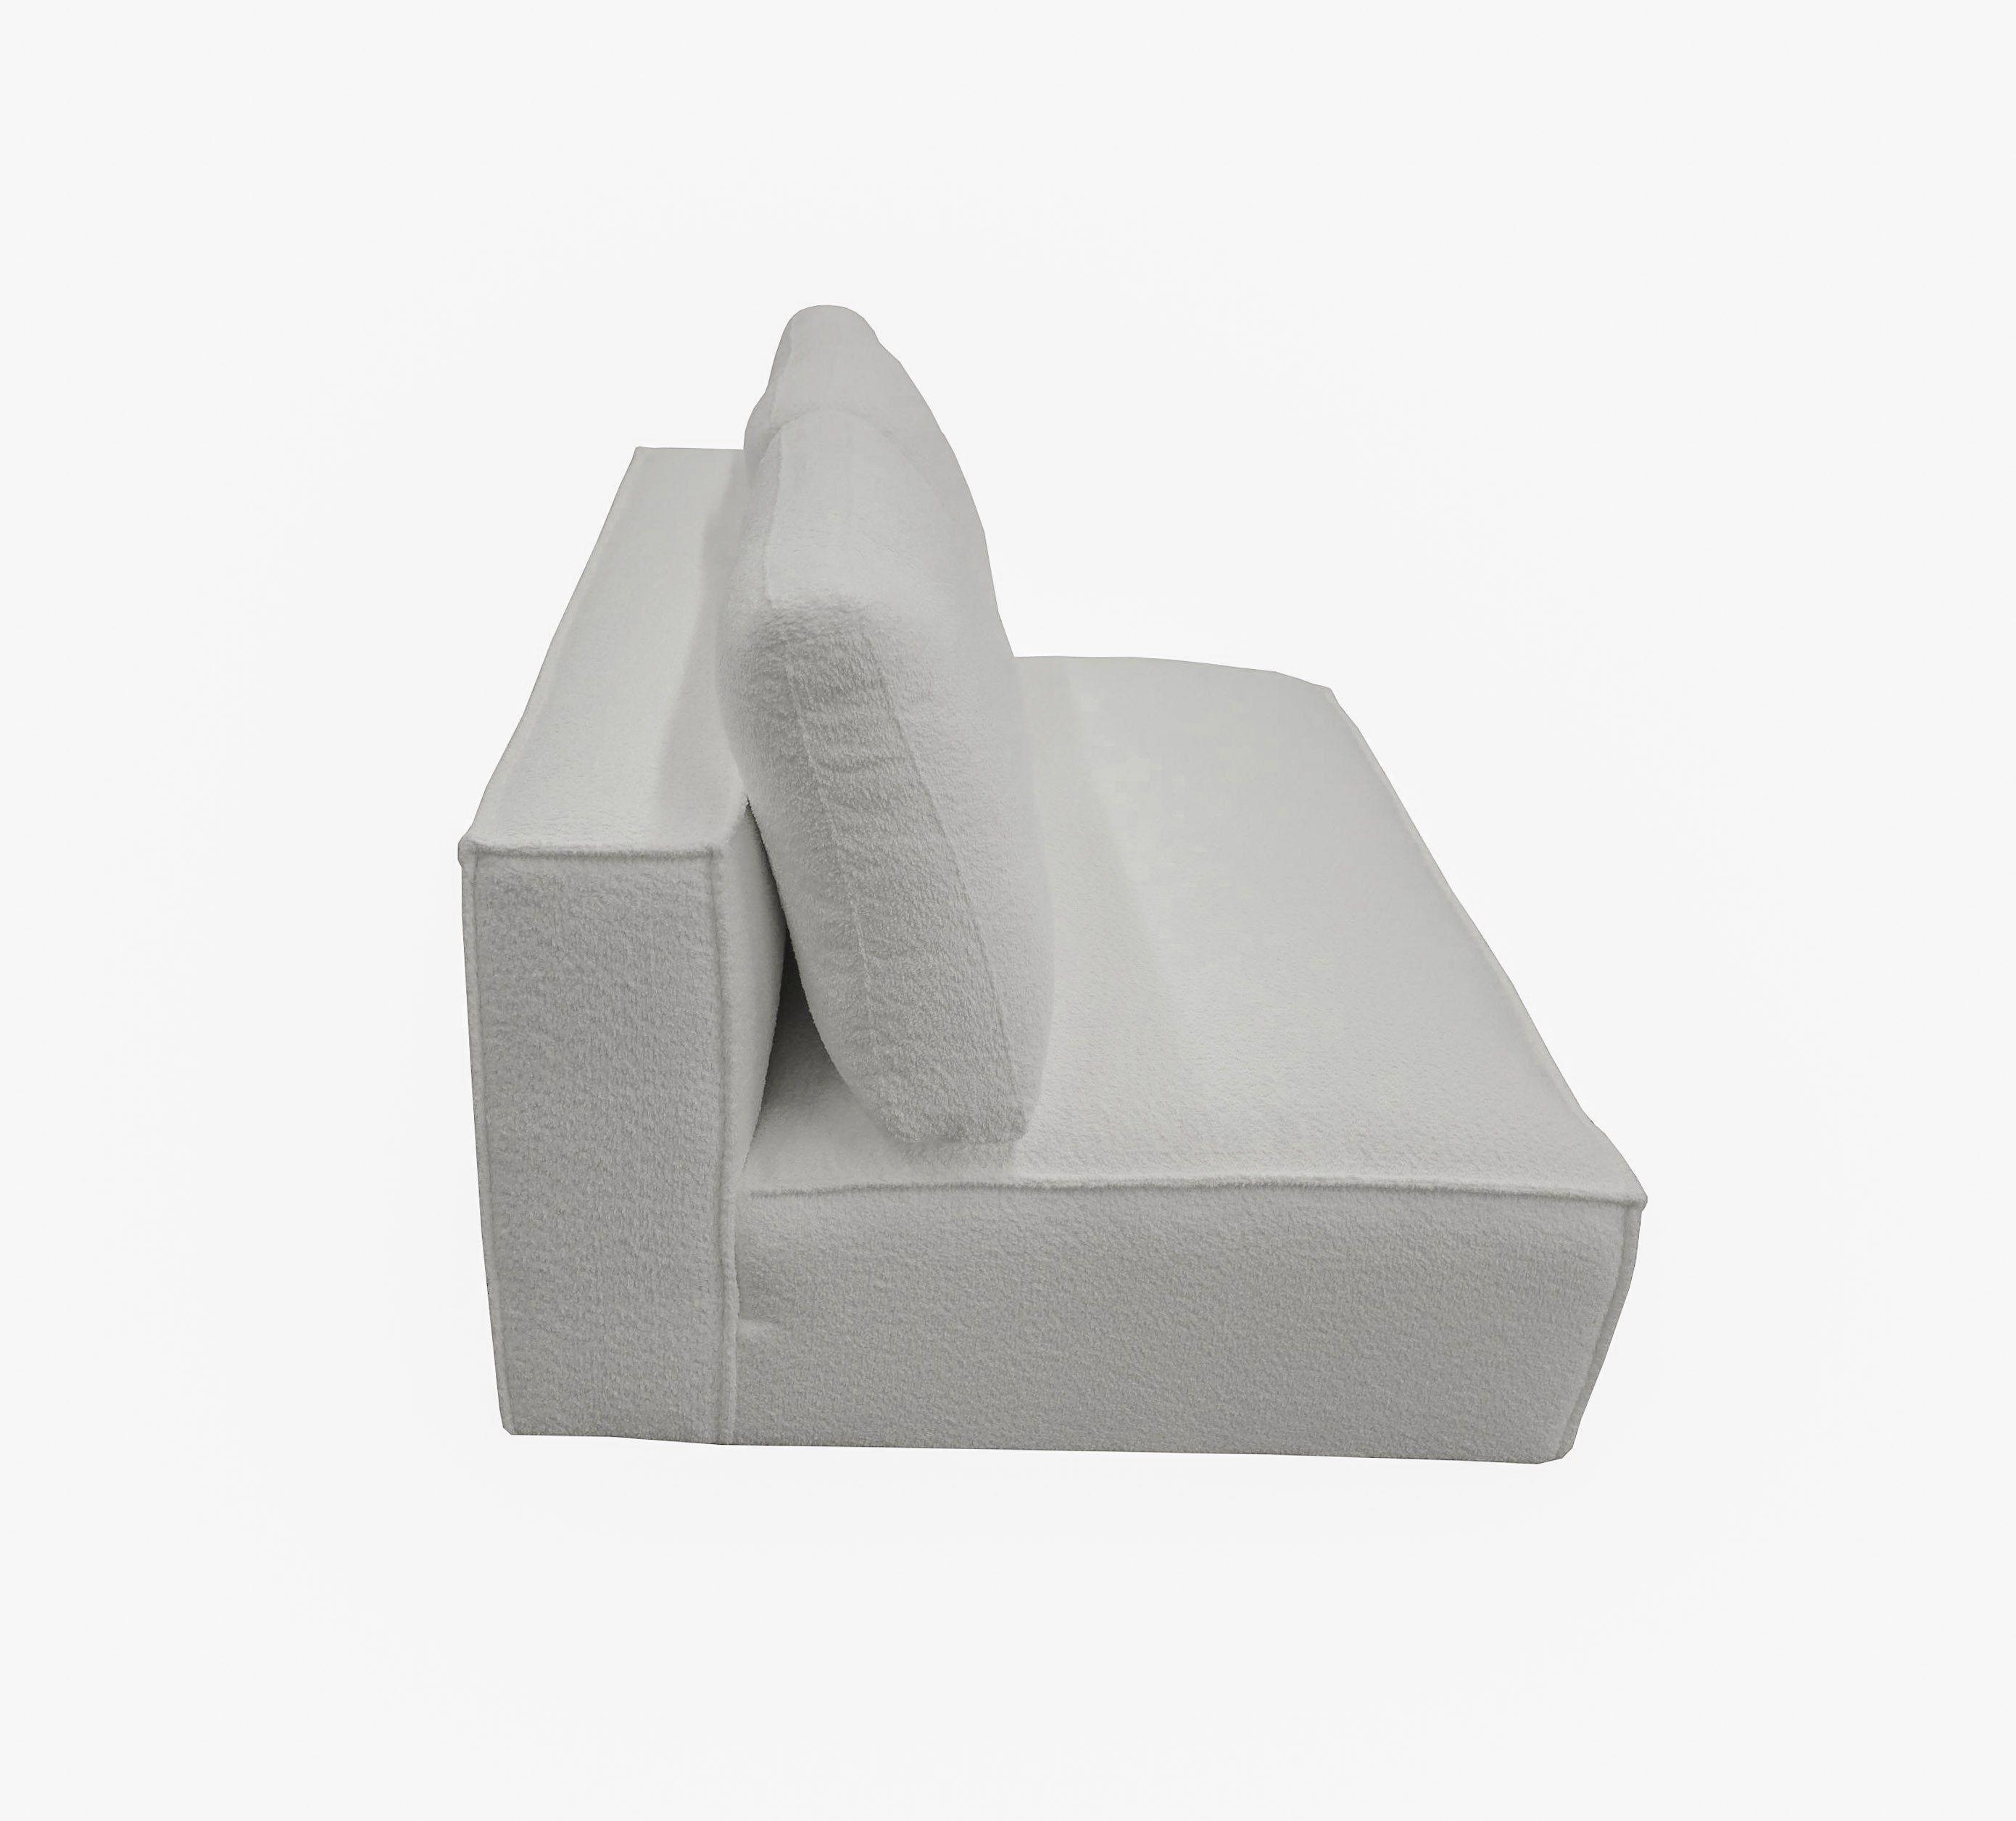 

    
VIG Furniture Lulu Modular Sectional Sofa VGSX-F22053-LAF-WHT Modular Sectional Sofa White VGSX-F22053-LAF-WHT
